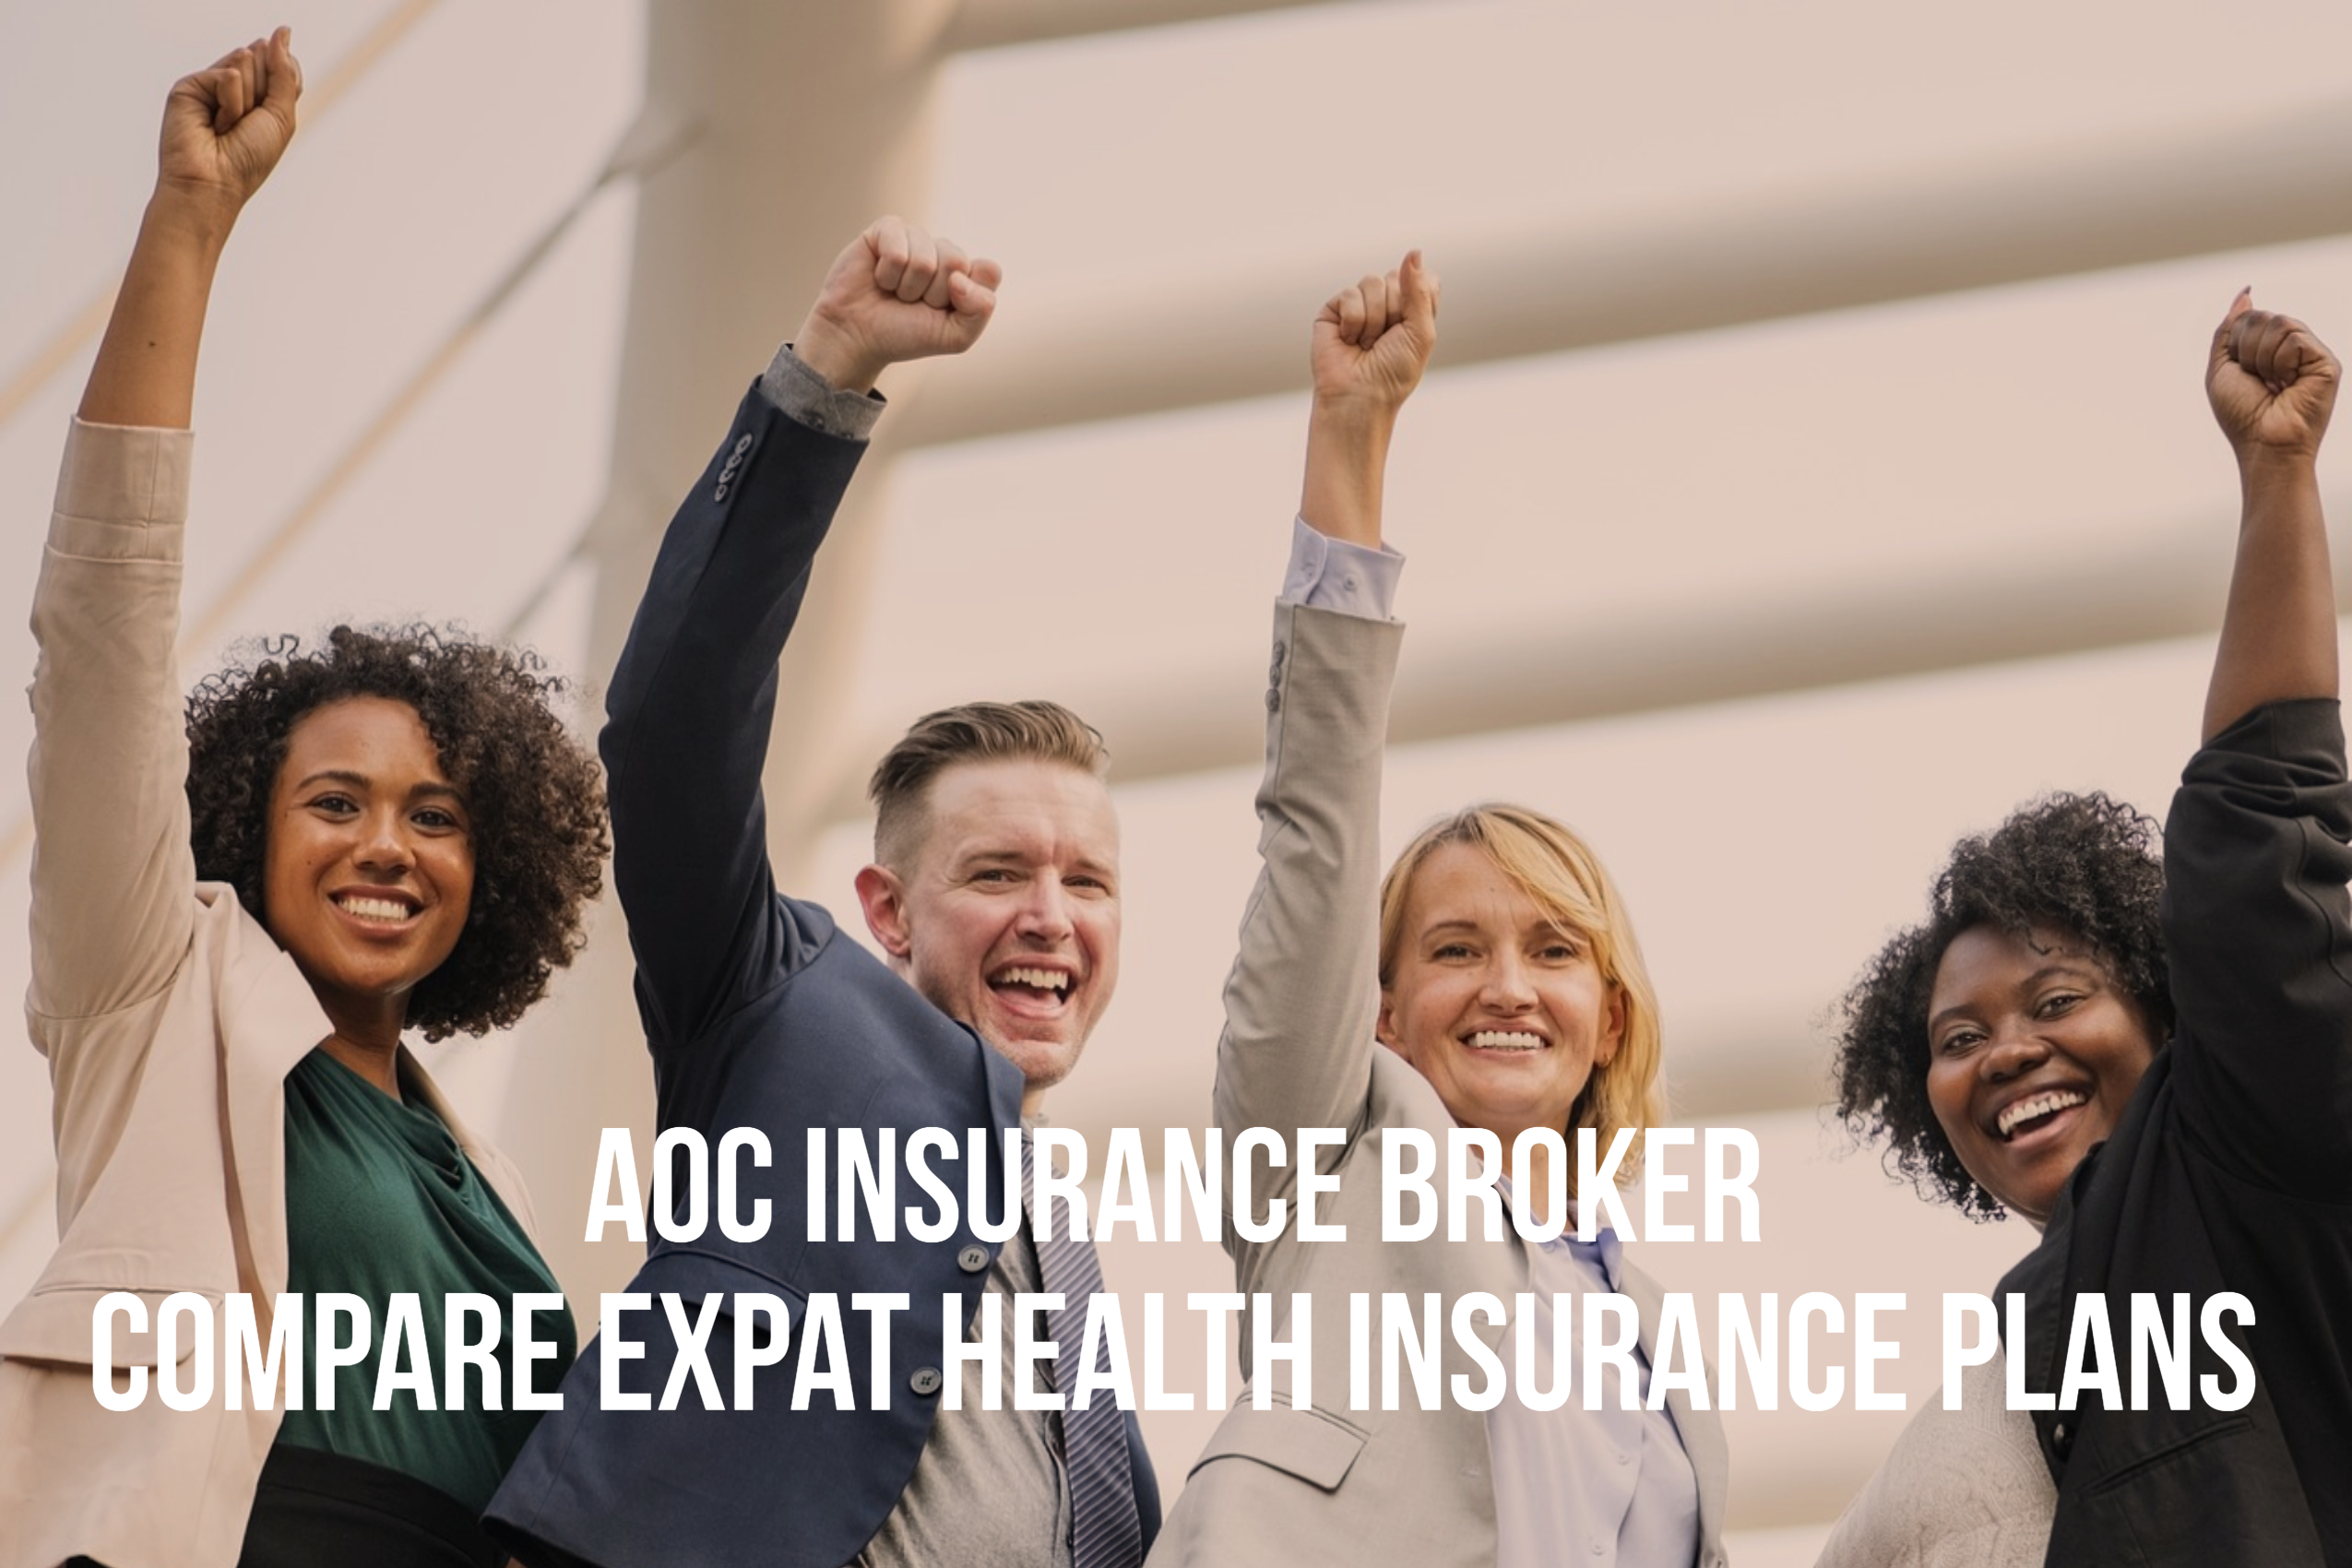 Aoc_insurance_compare_expat_health_insurance.jpg